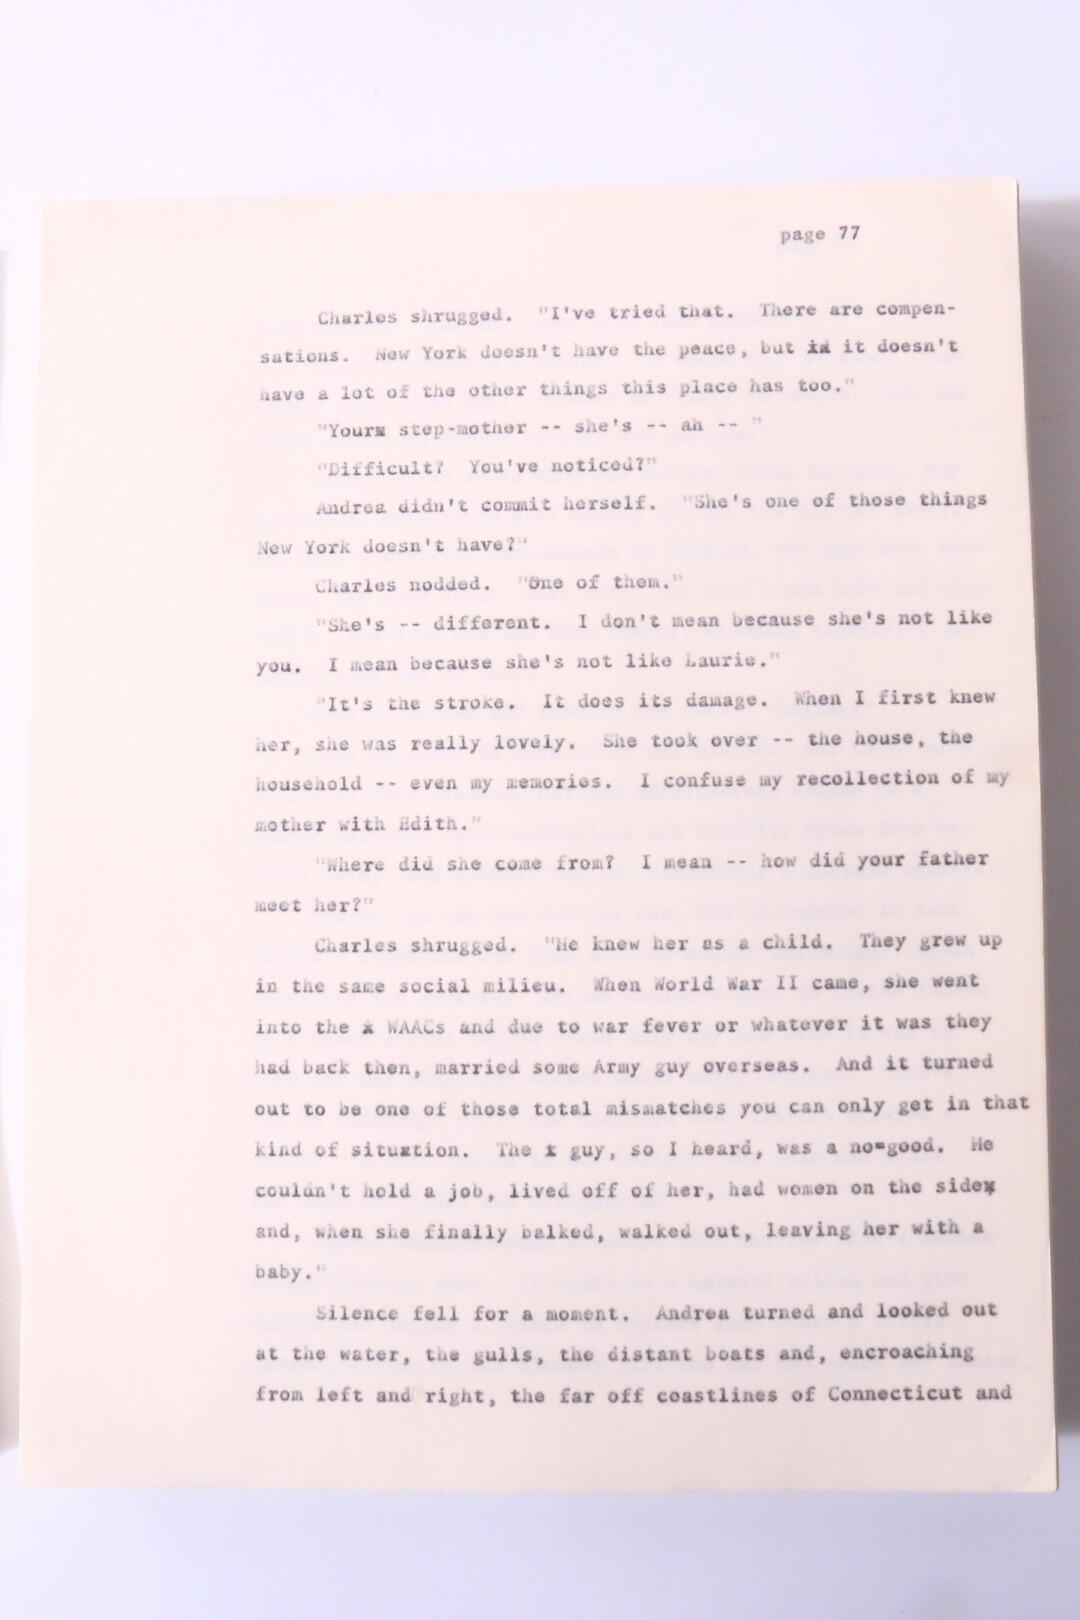 Hillary Waugh - Seaview Manor Typescript - No Publisher, 1976, Manuscript.